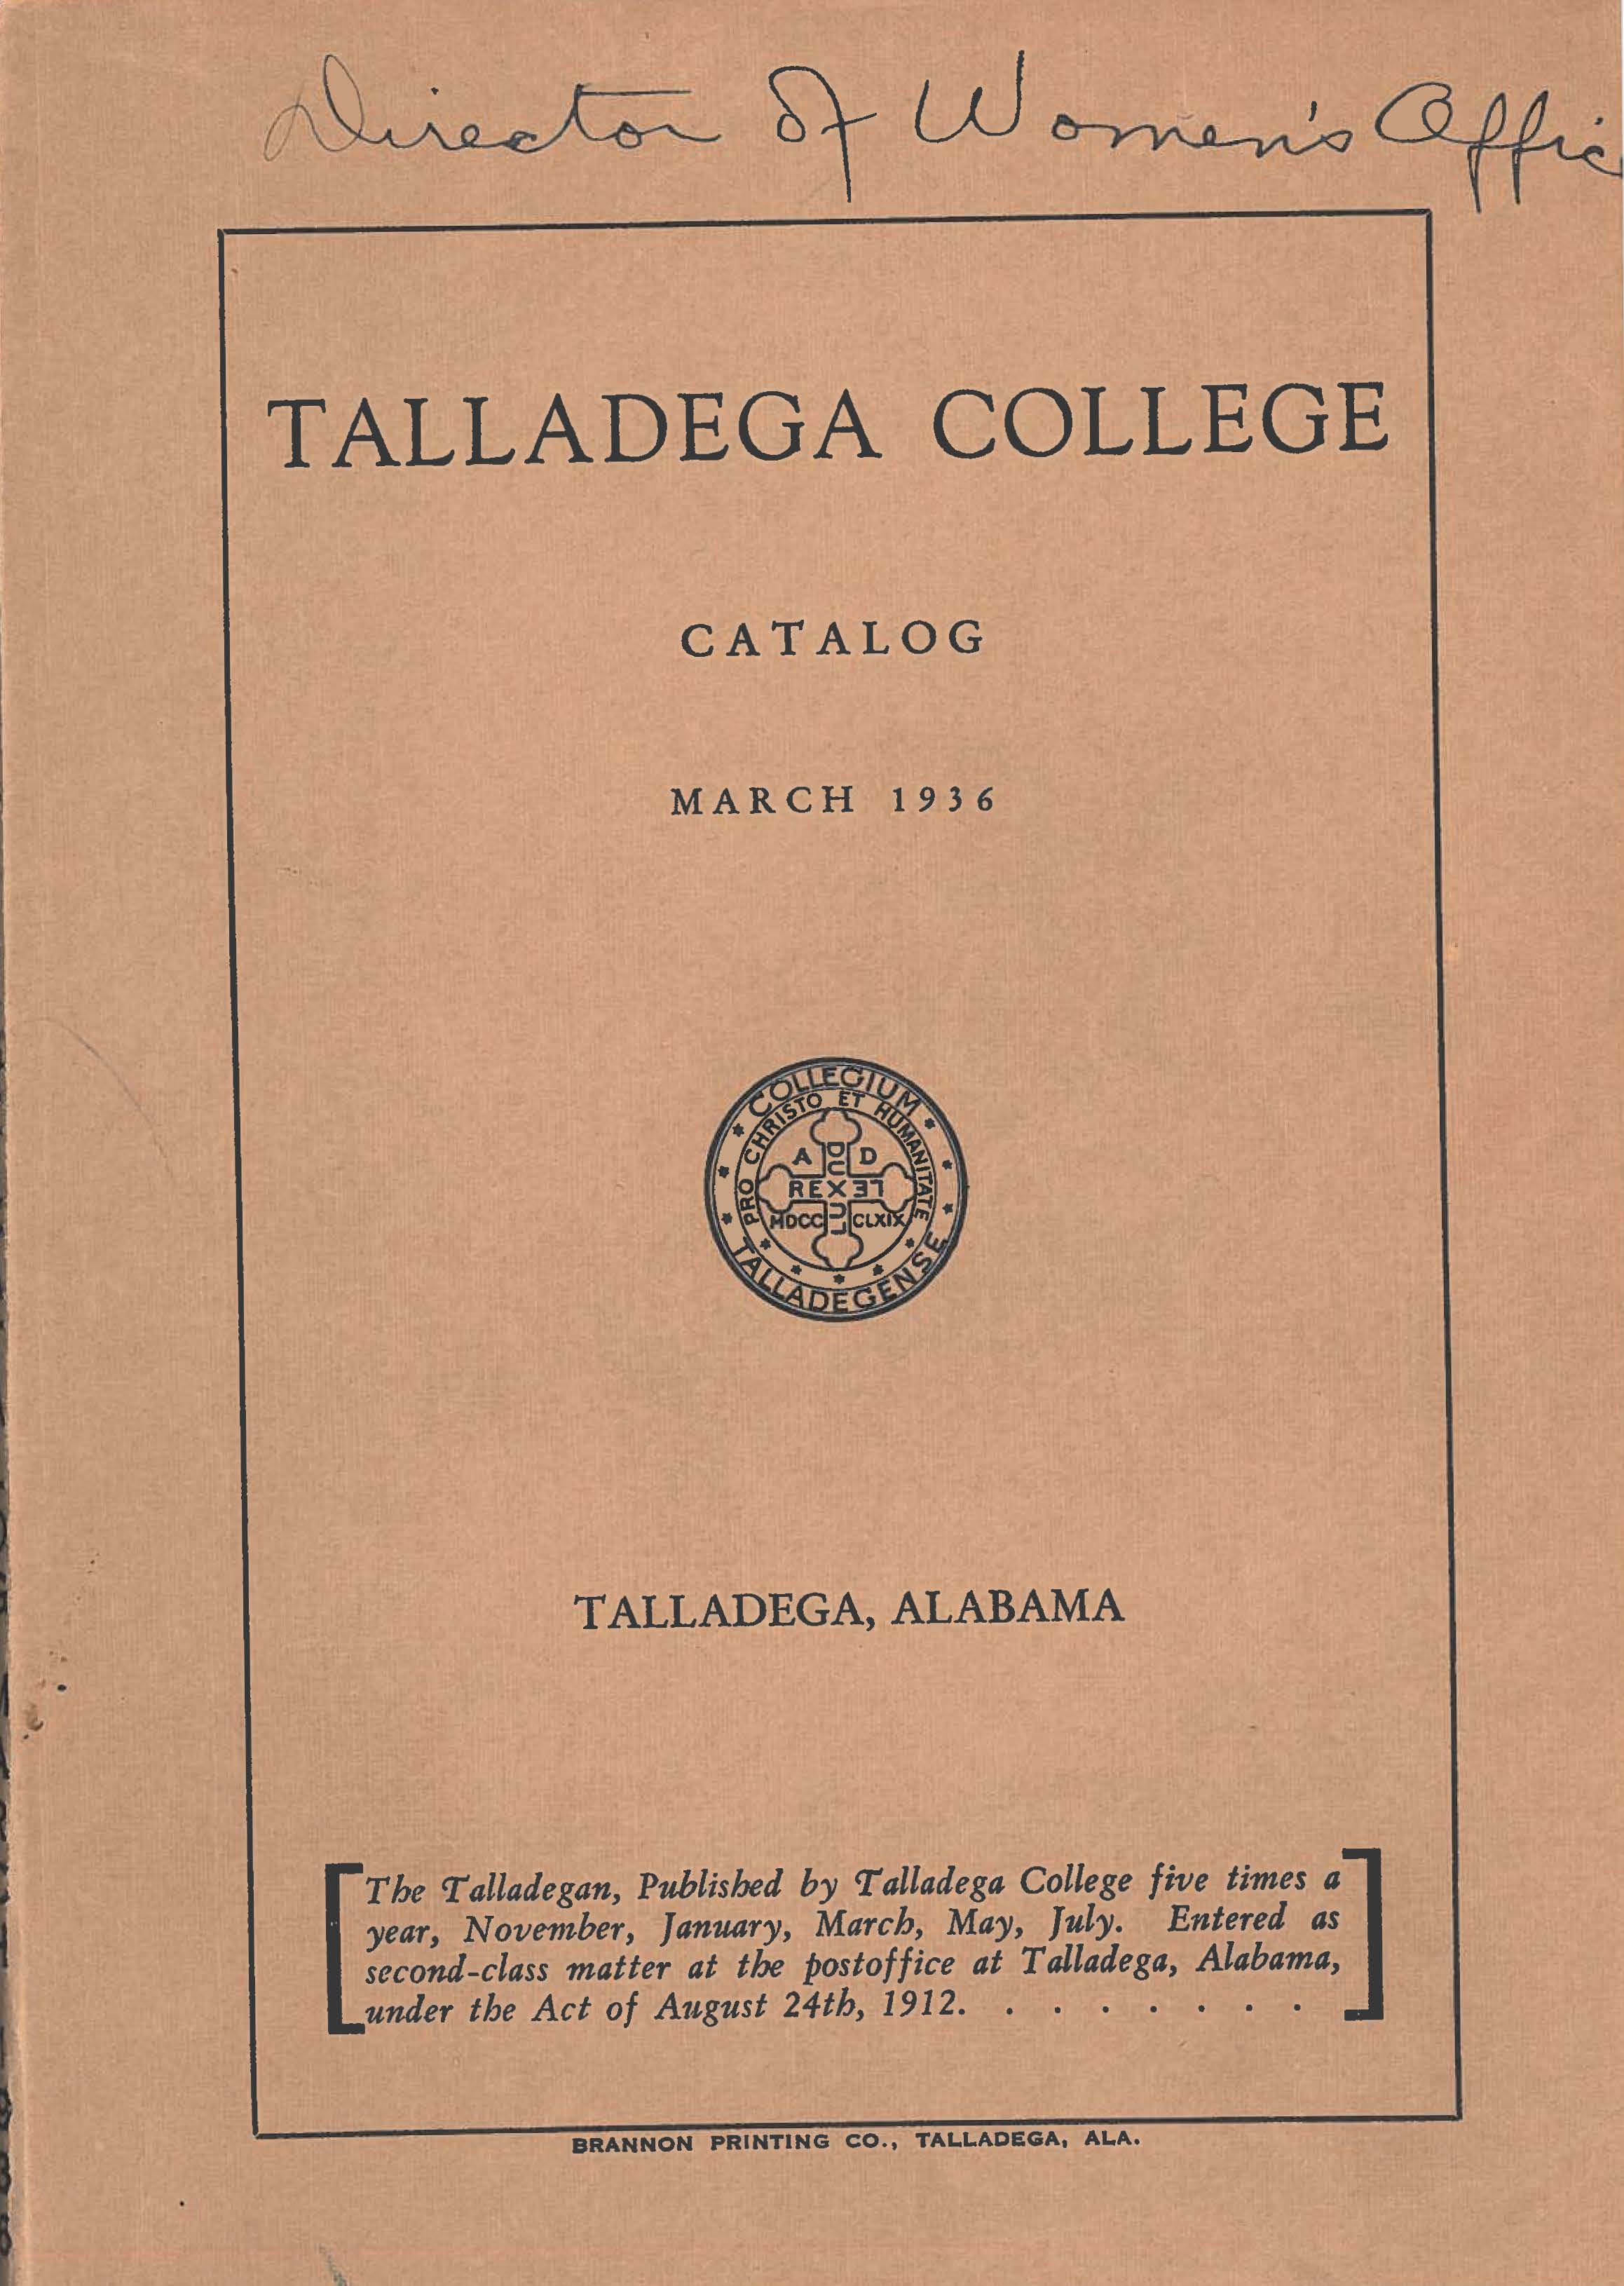 Talladega College Catalog 1936